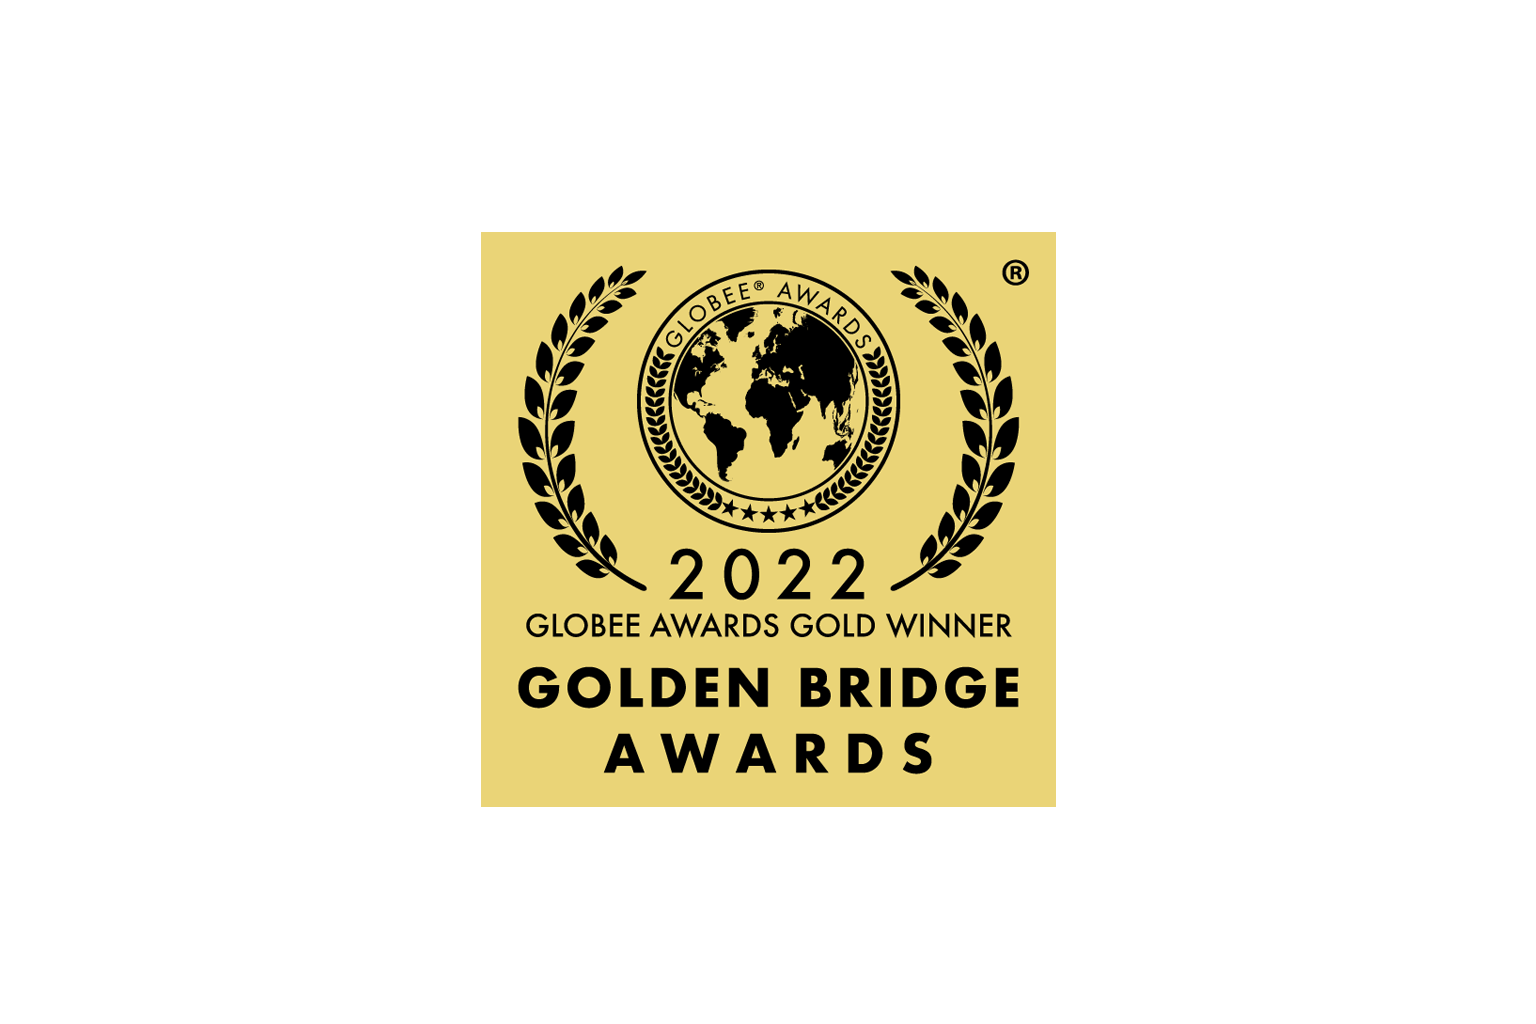 Golden Bridge Awards - 2022 Globee Awards Gold WInner